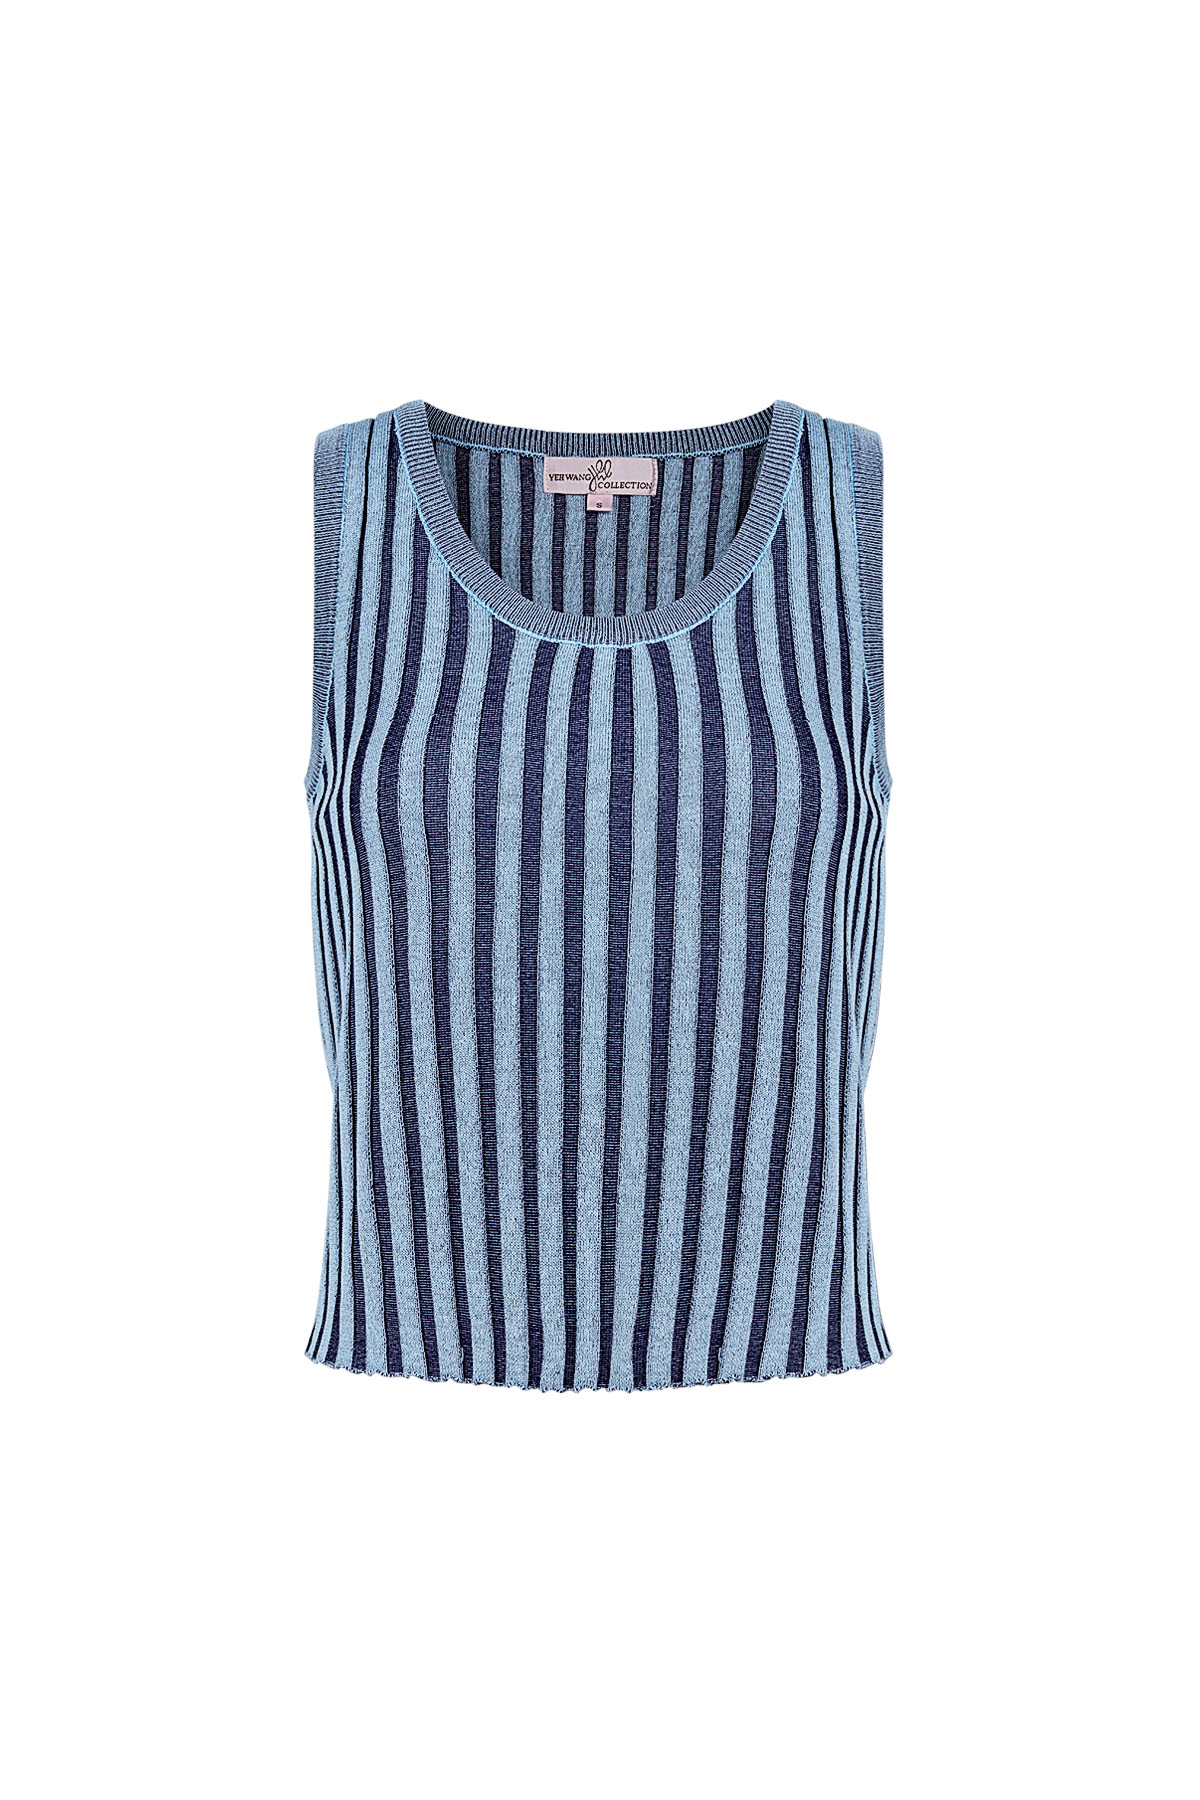 Sleeveless, striped top medium – blue h5 